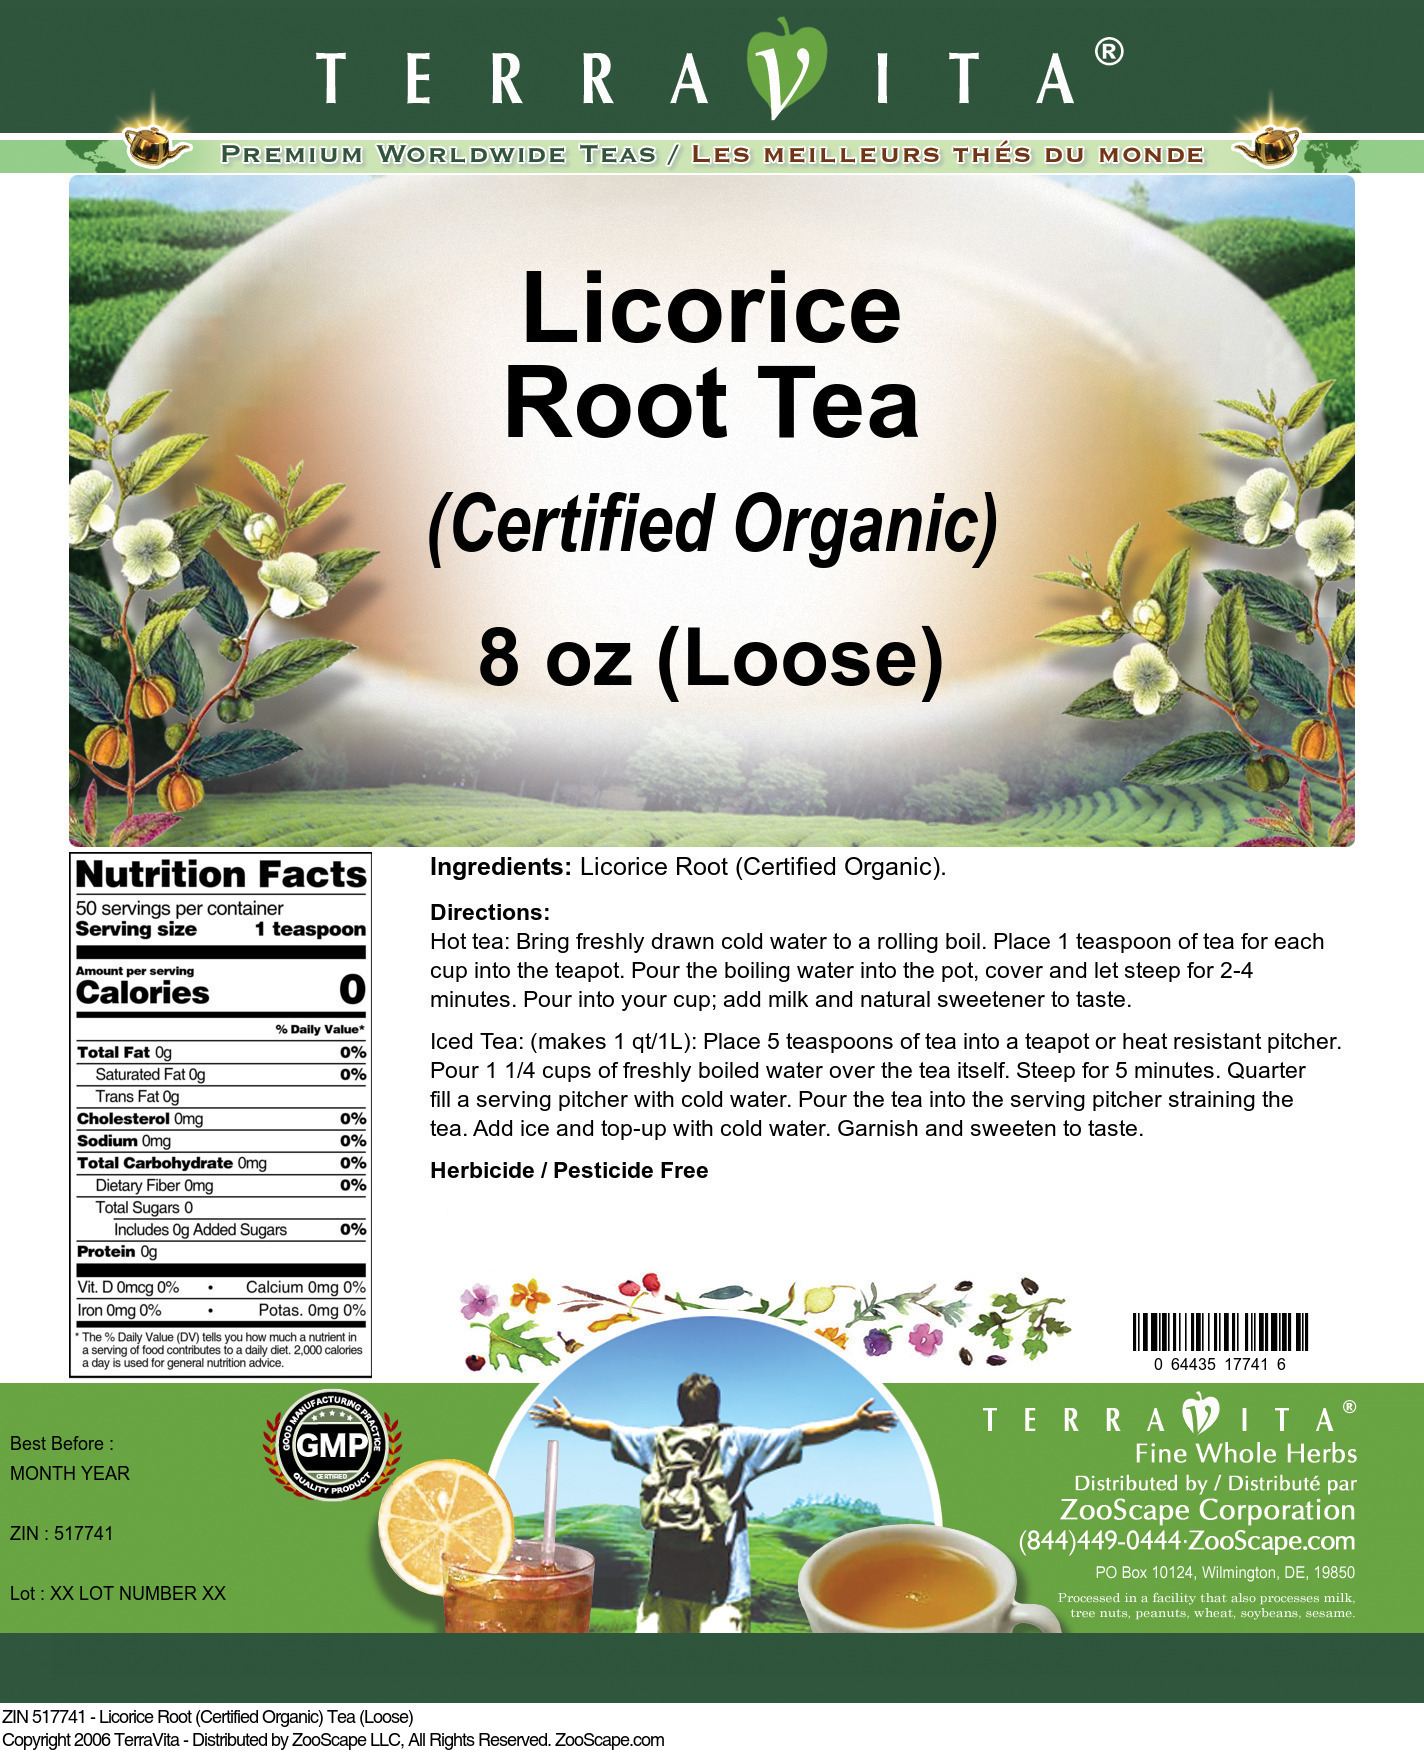 Licorice Root (Certified Organic) Tea (Loose) - Label